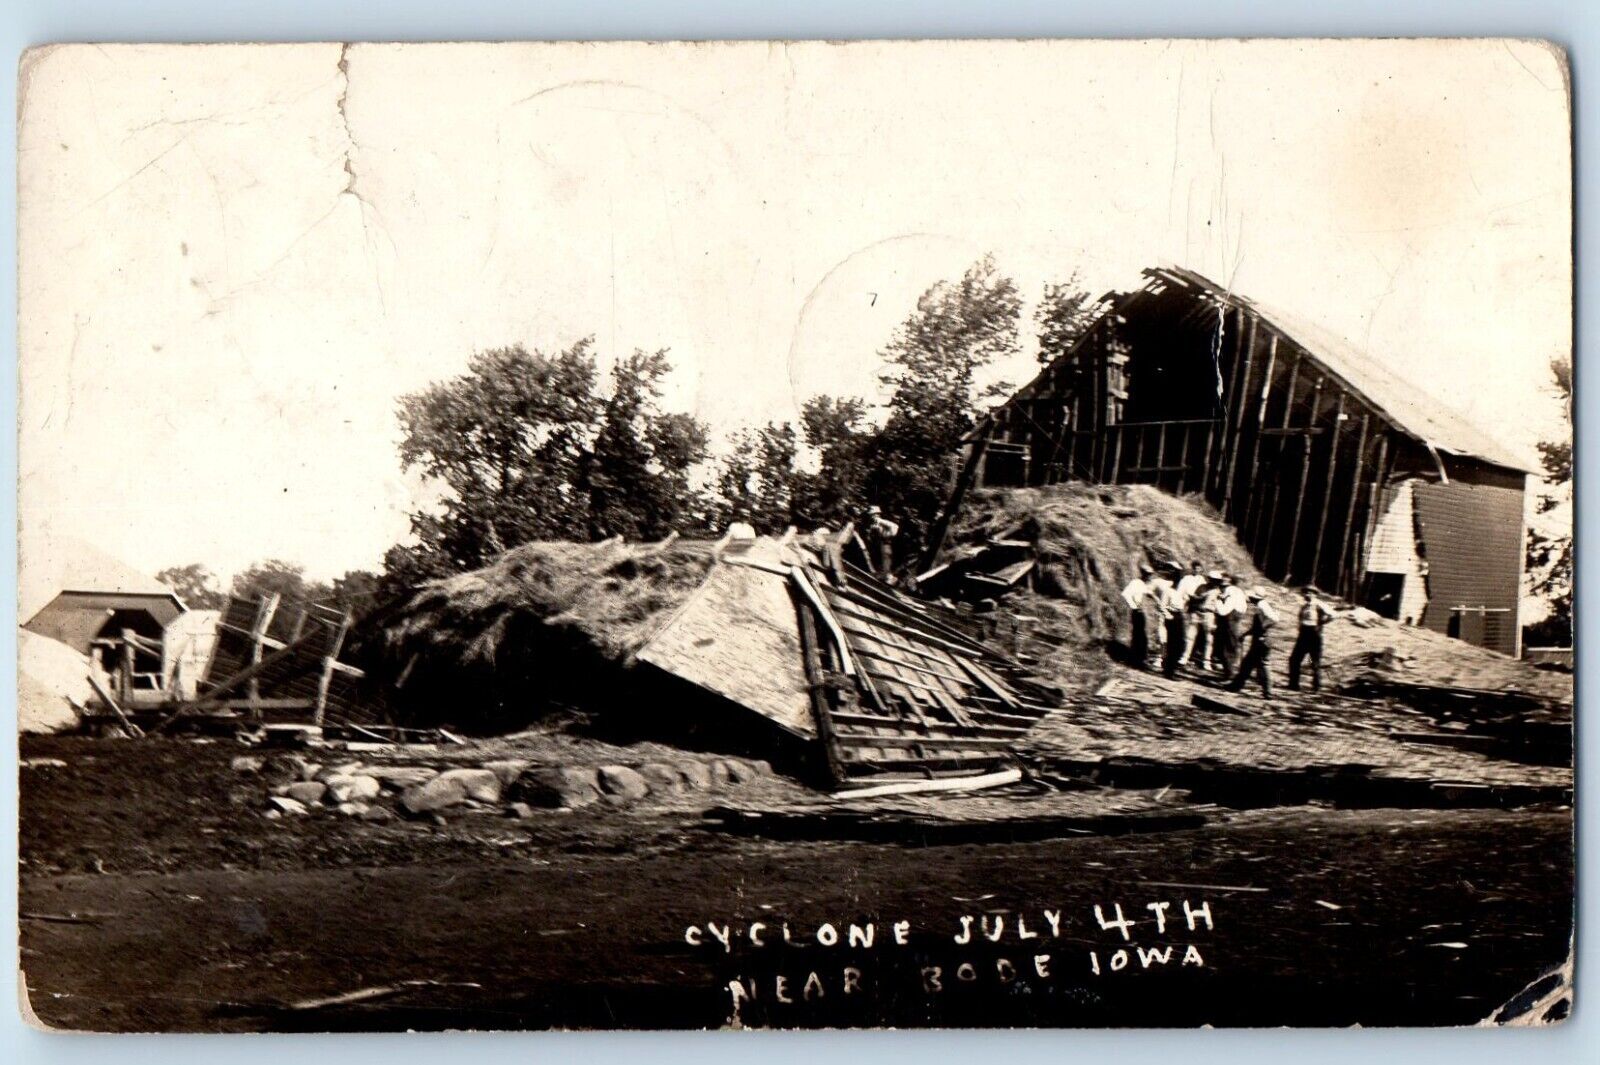 Bode Iowa IA Postcard RPPC Photo Cyclone July 4th Tornado Disaster 1913 Posted